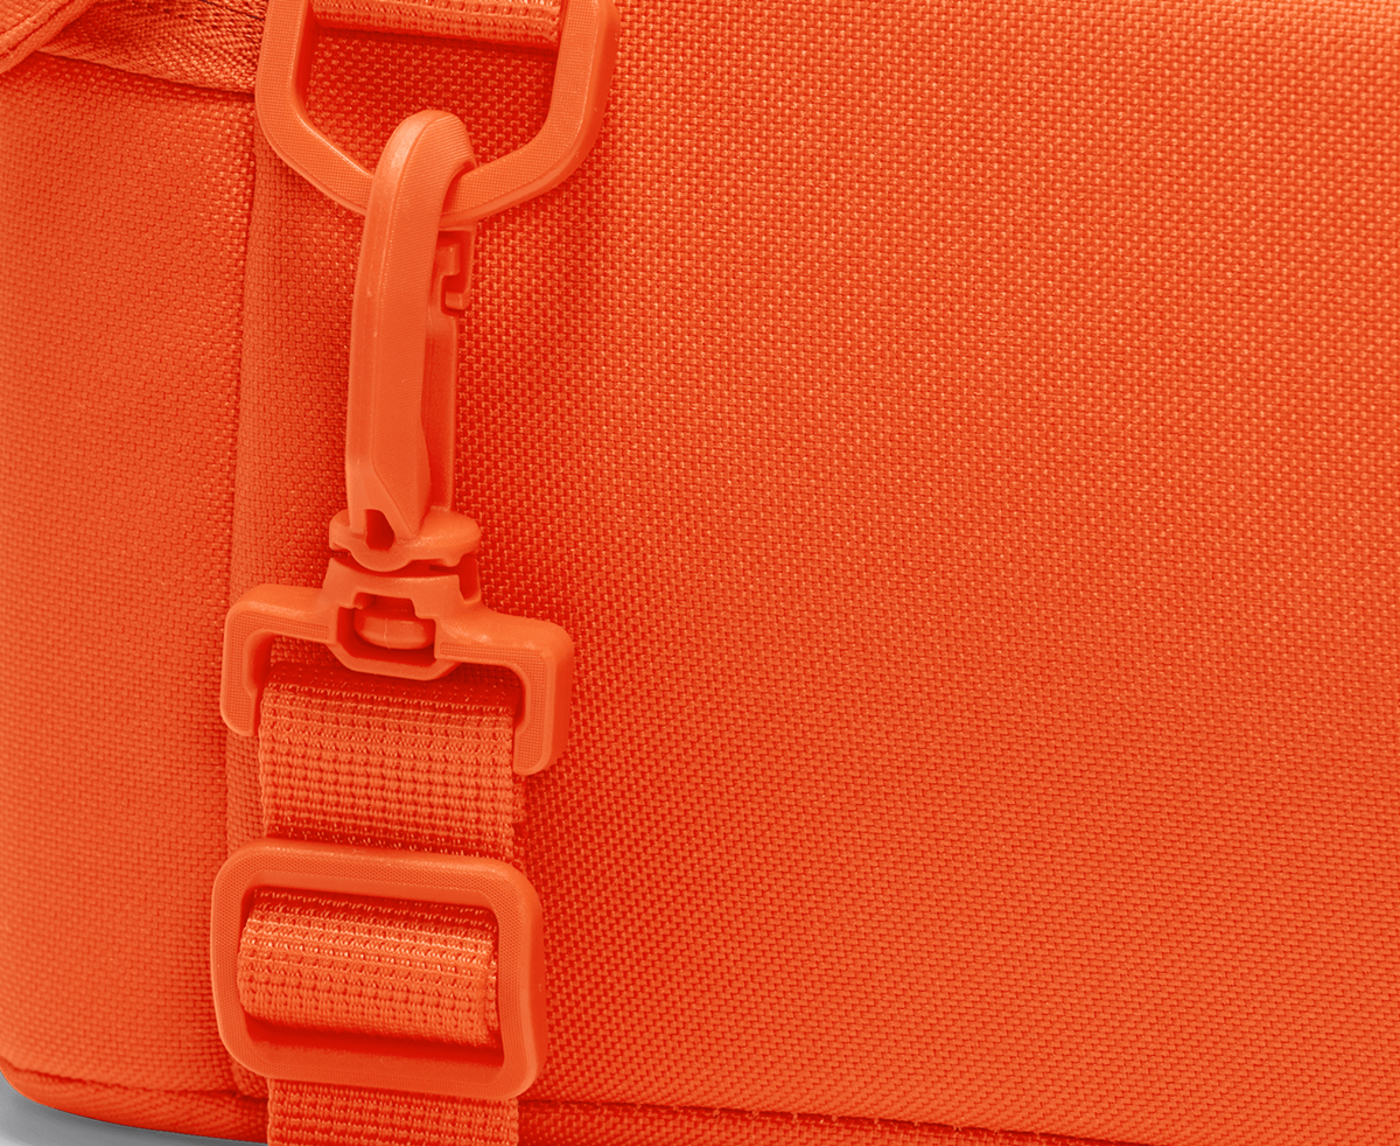 Nike Sportswear Orange/White Shoebox Bag Release